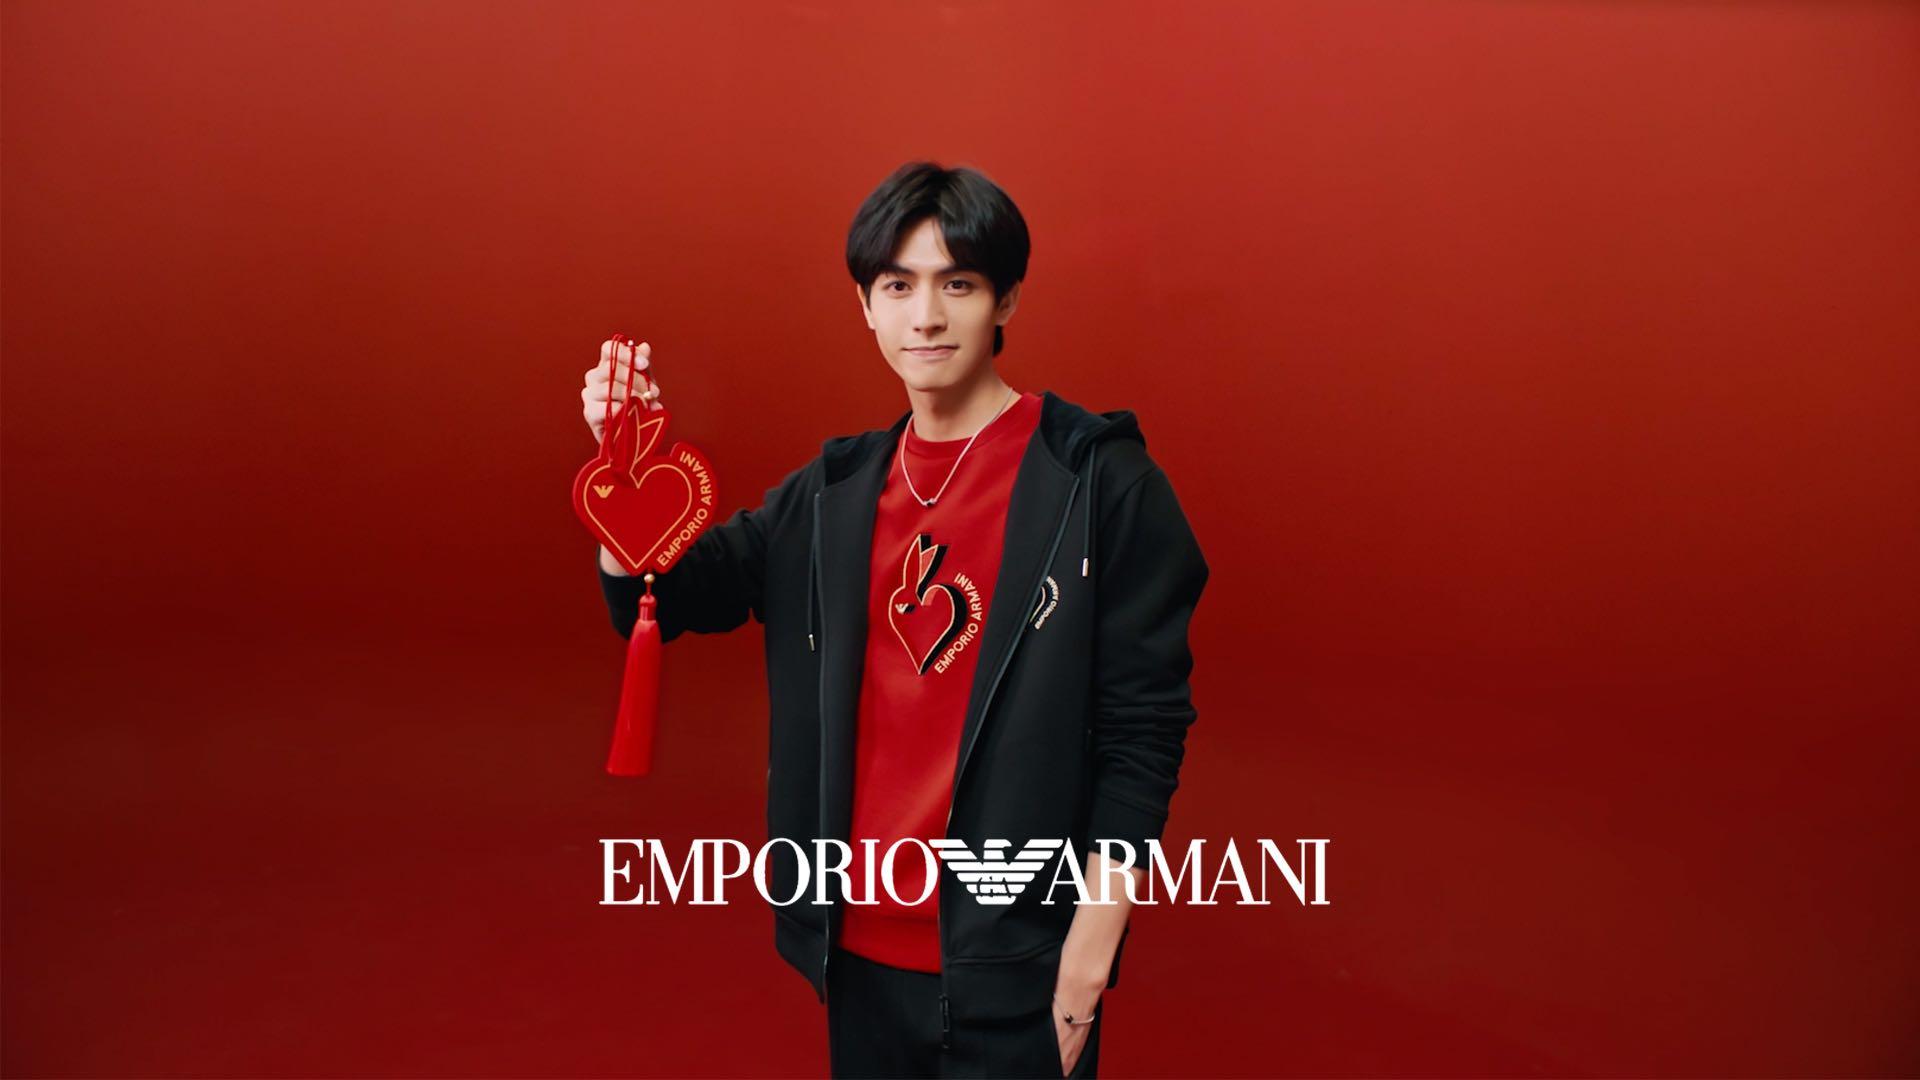 Emporio Armani × 宋威龙 | CNY